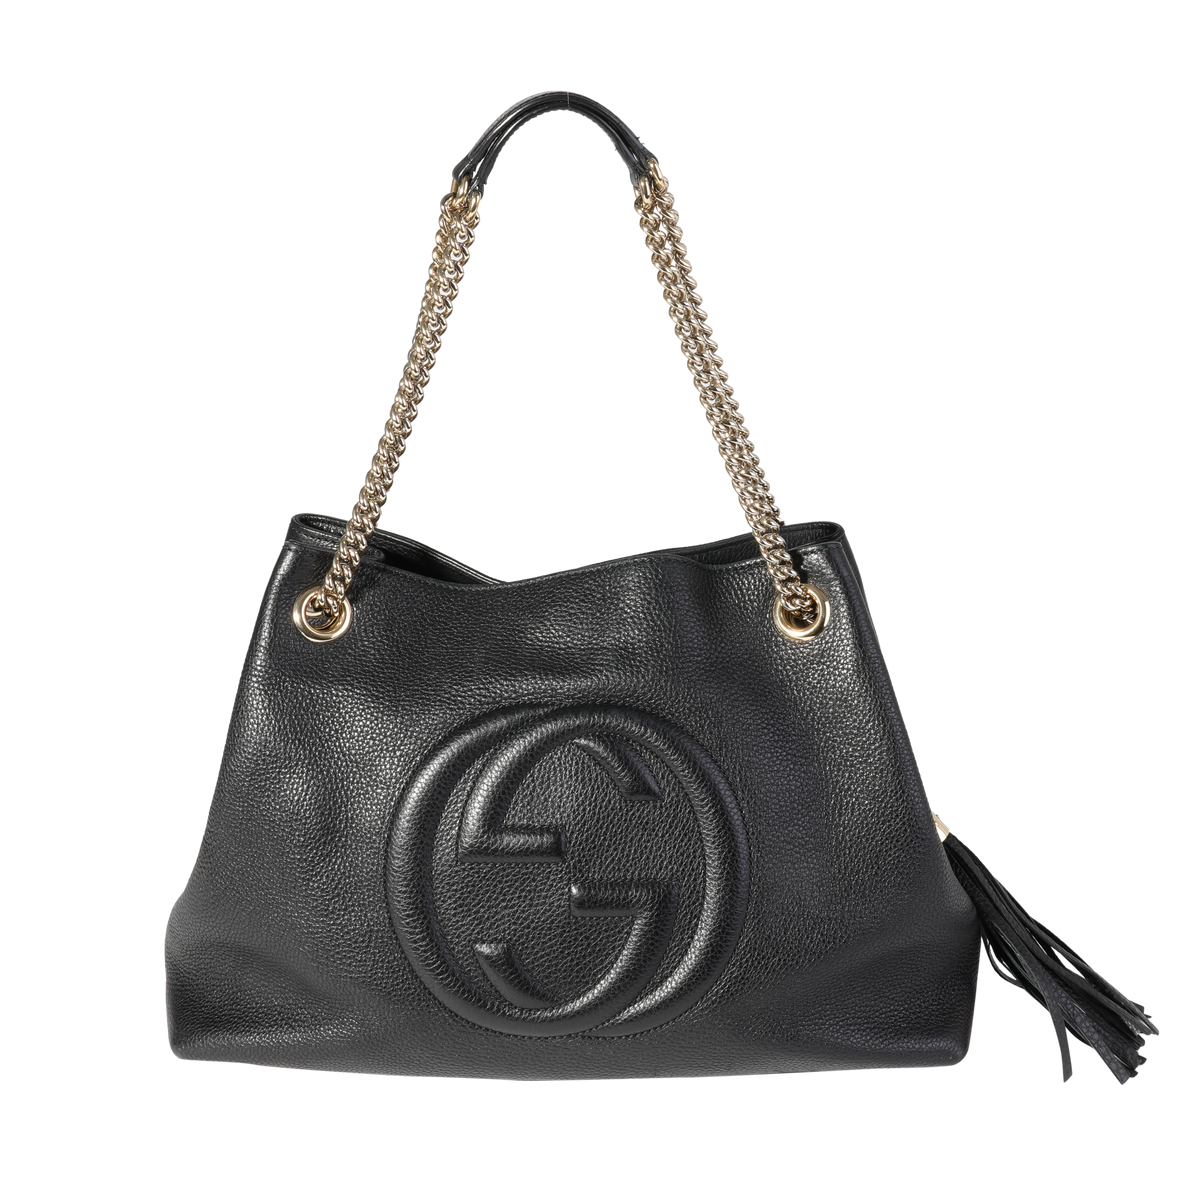 Gucci Black Pebbled Leather Medium Soho Chain Shoulder Bag